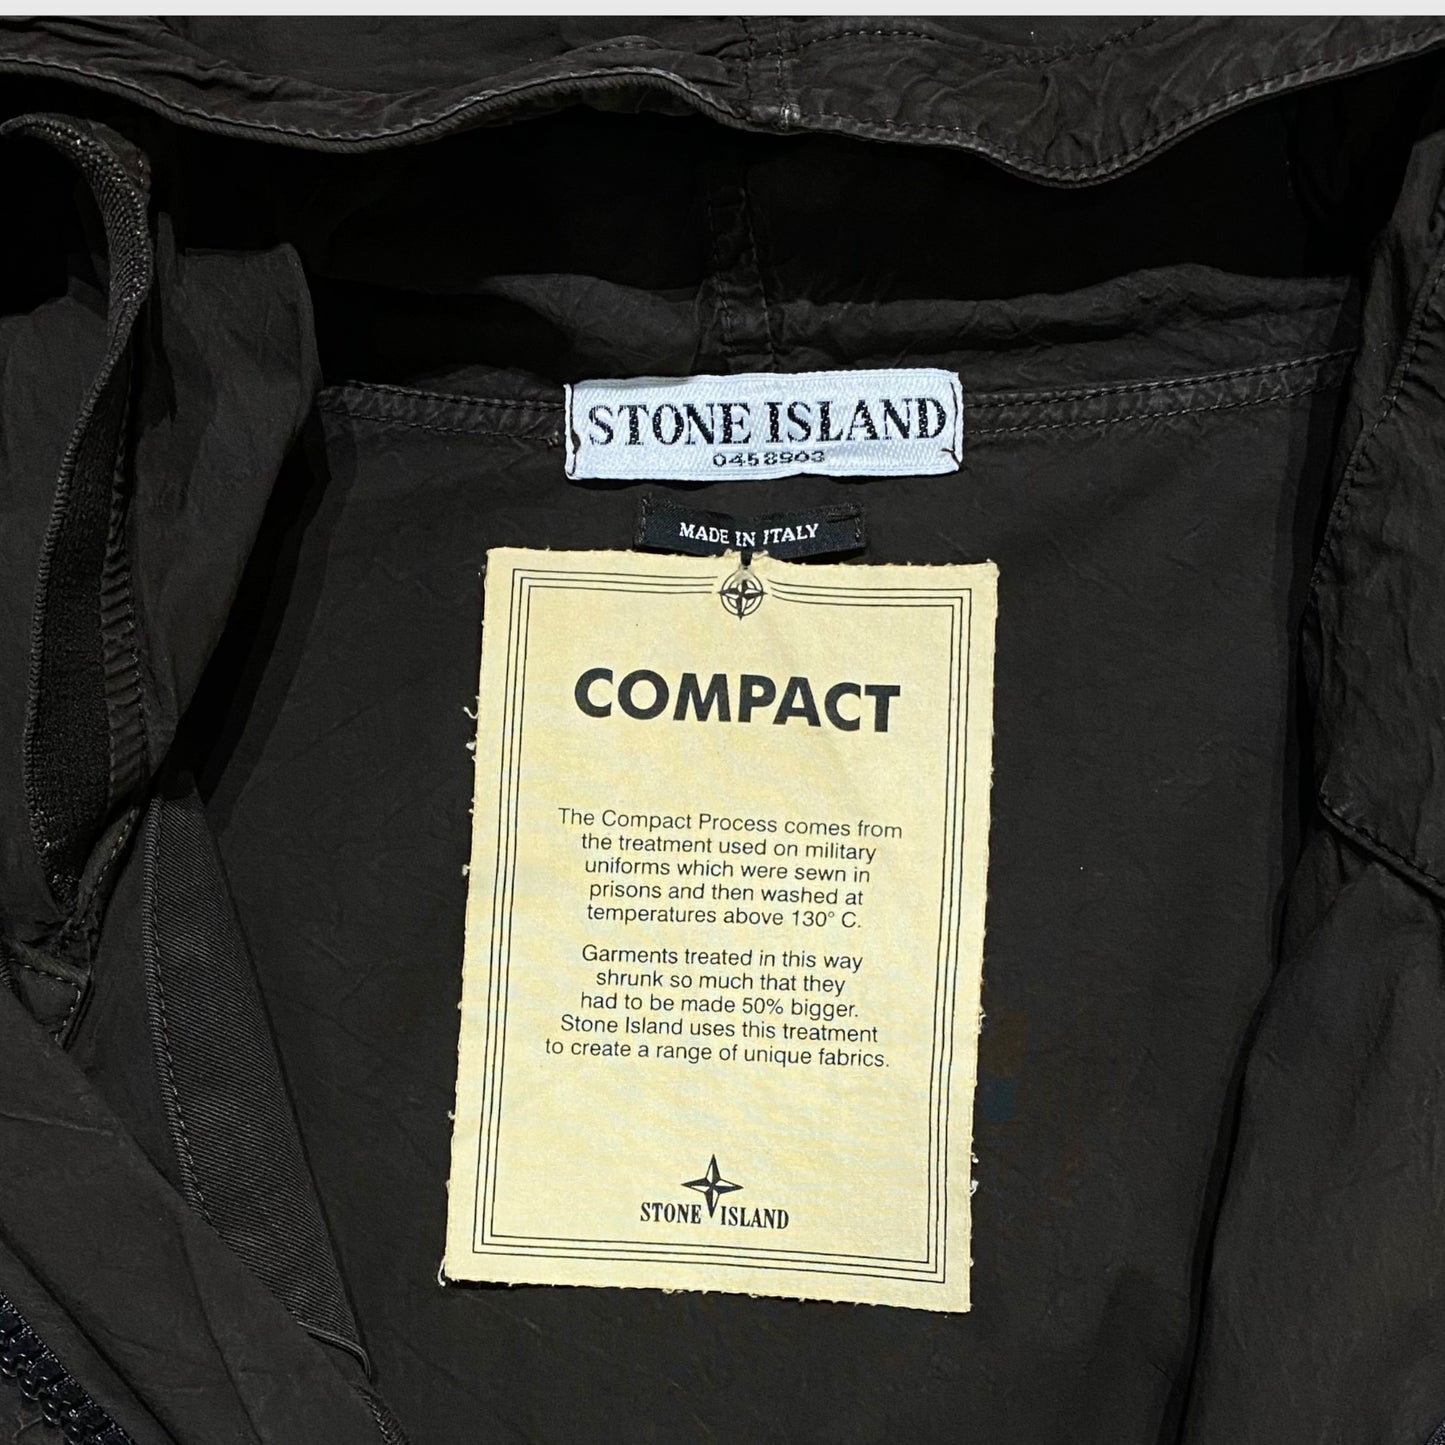 2005's S/S "STONE ISLAND" Compact treatment jacket